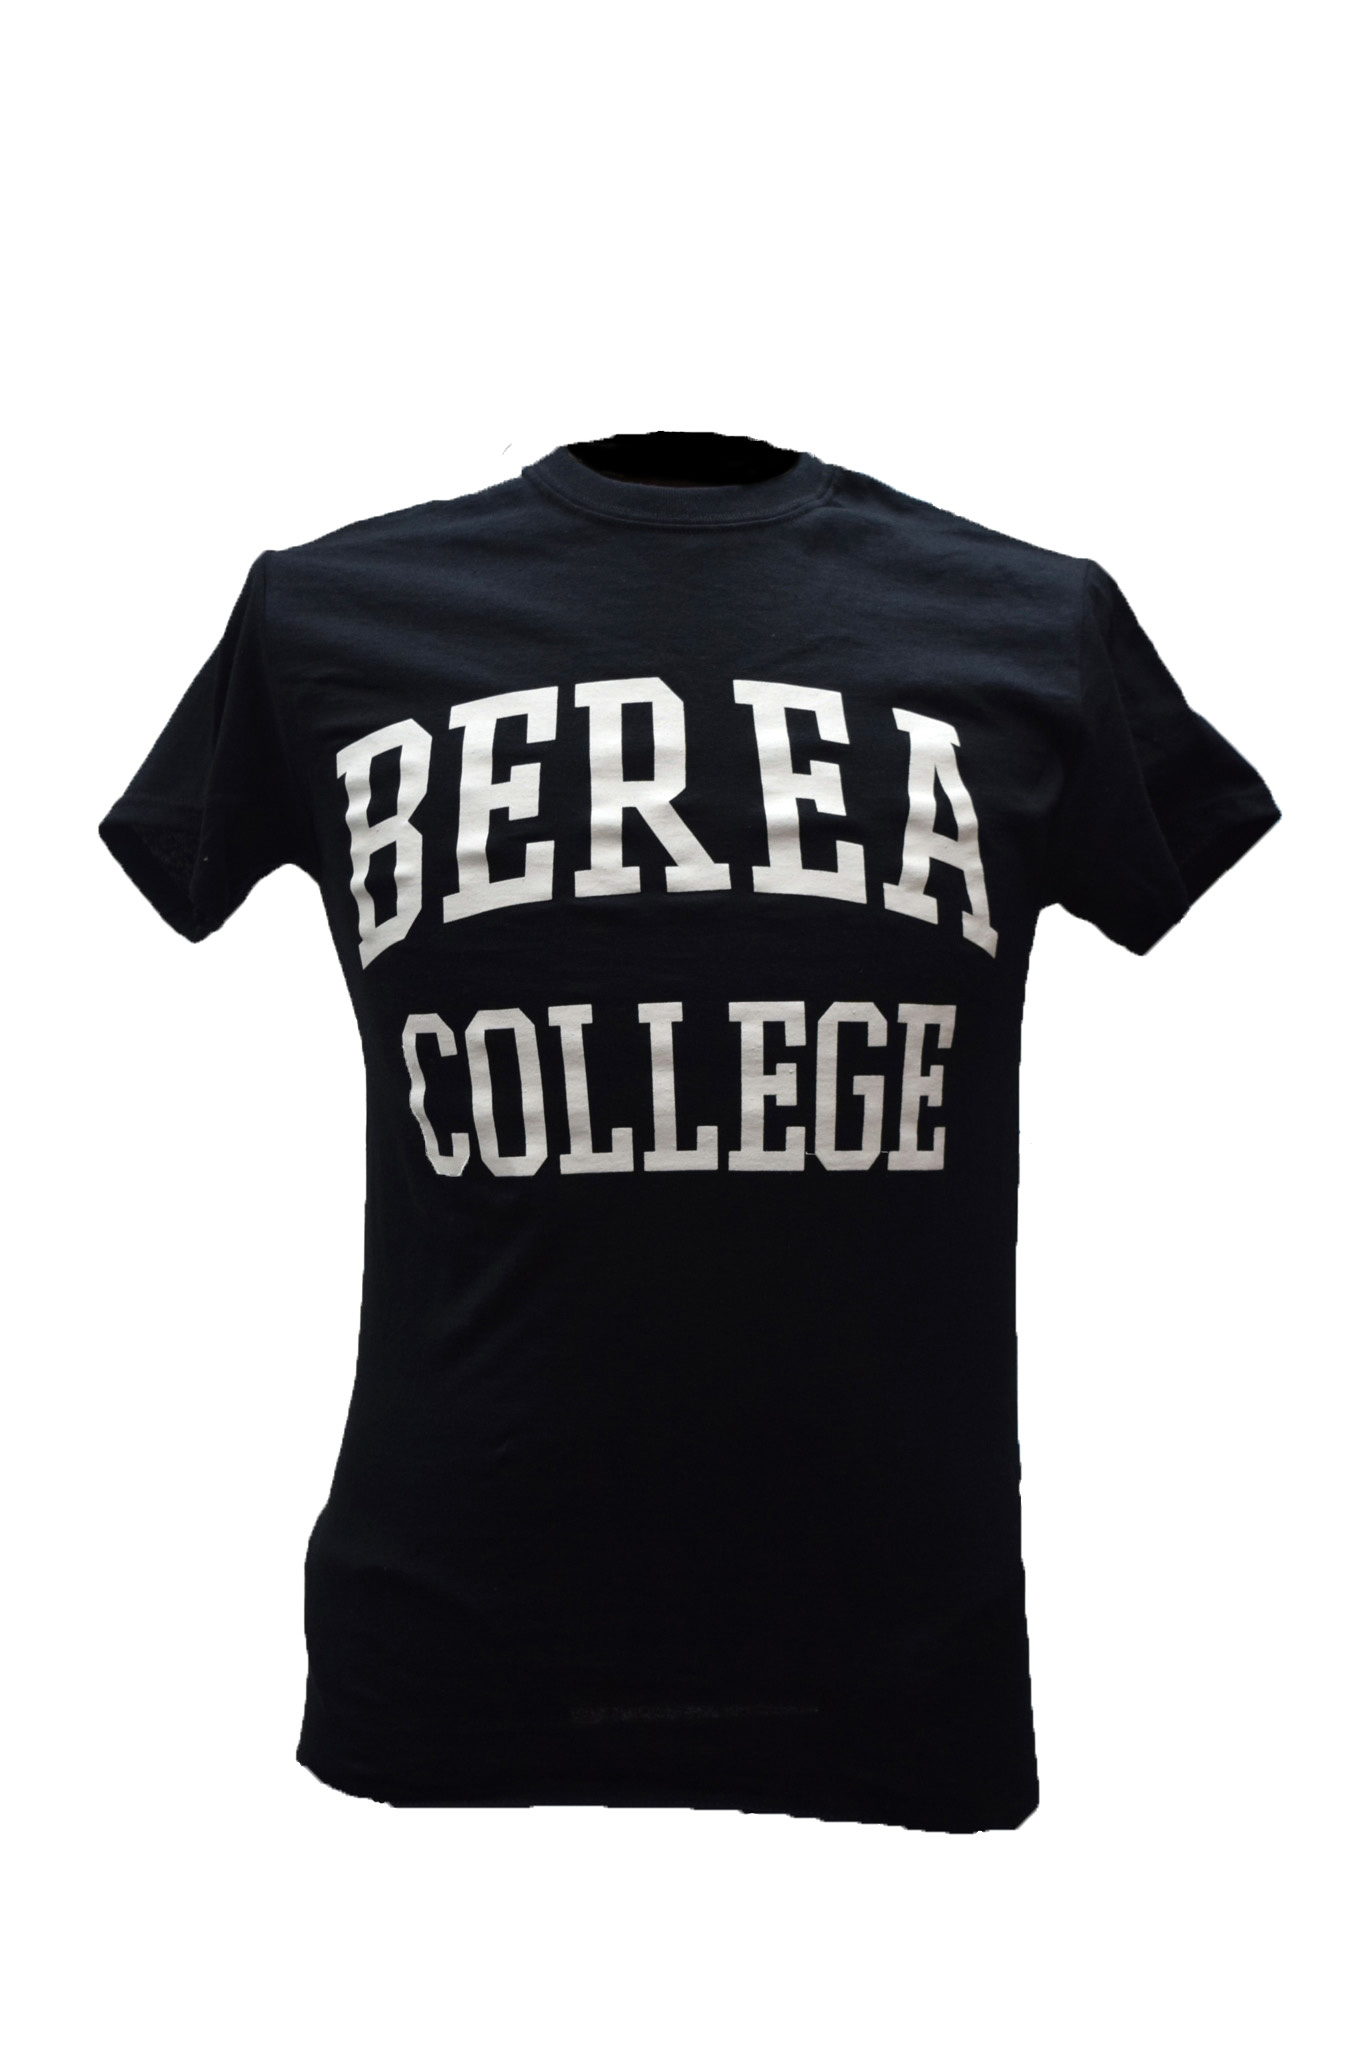 Berea College Classic T- Shirt-5